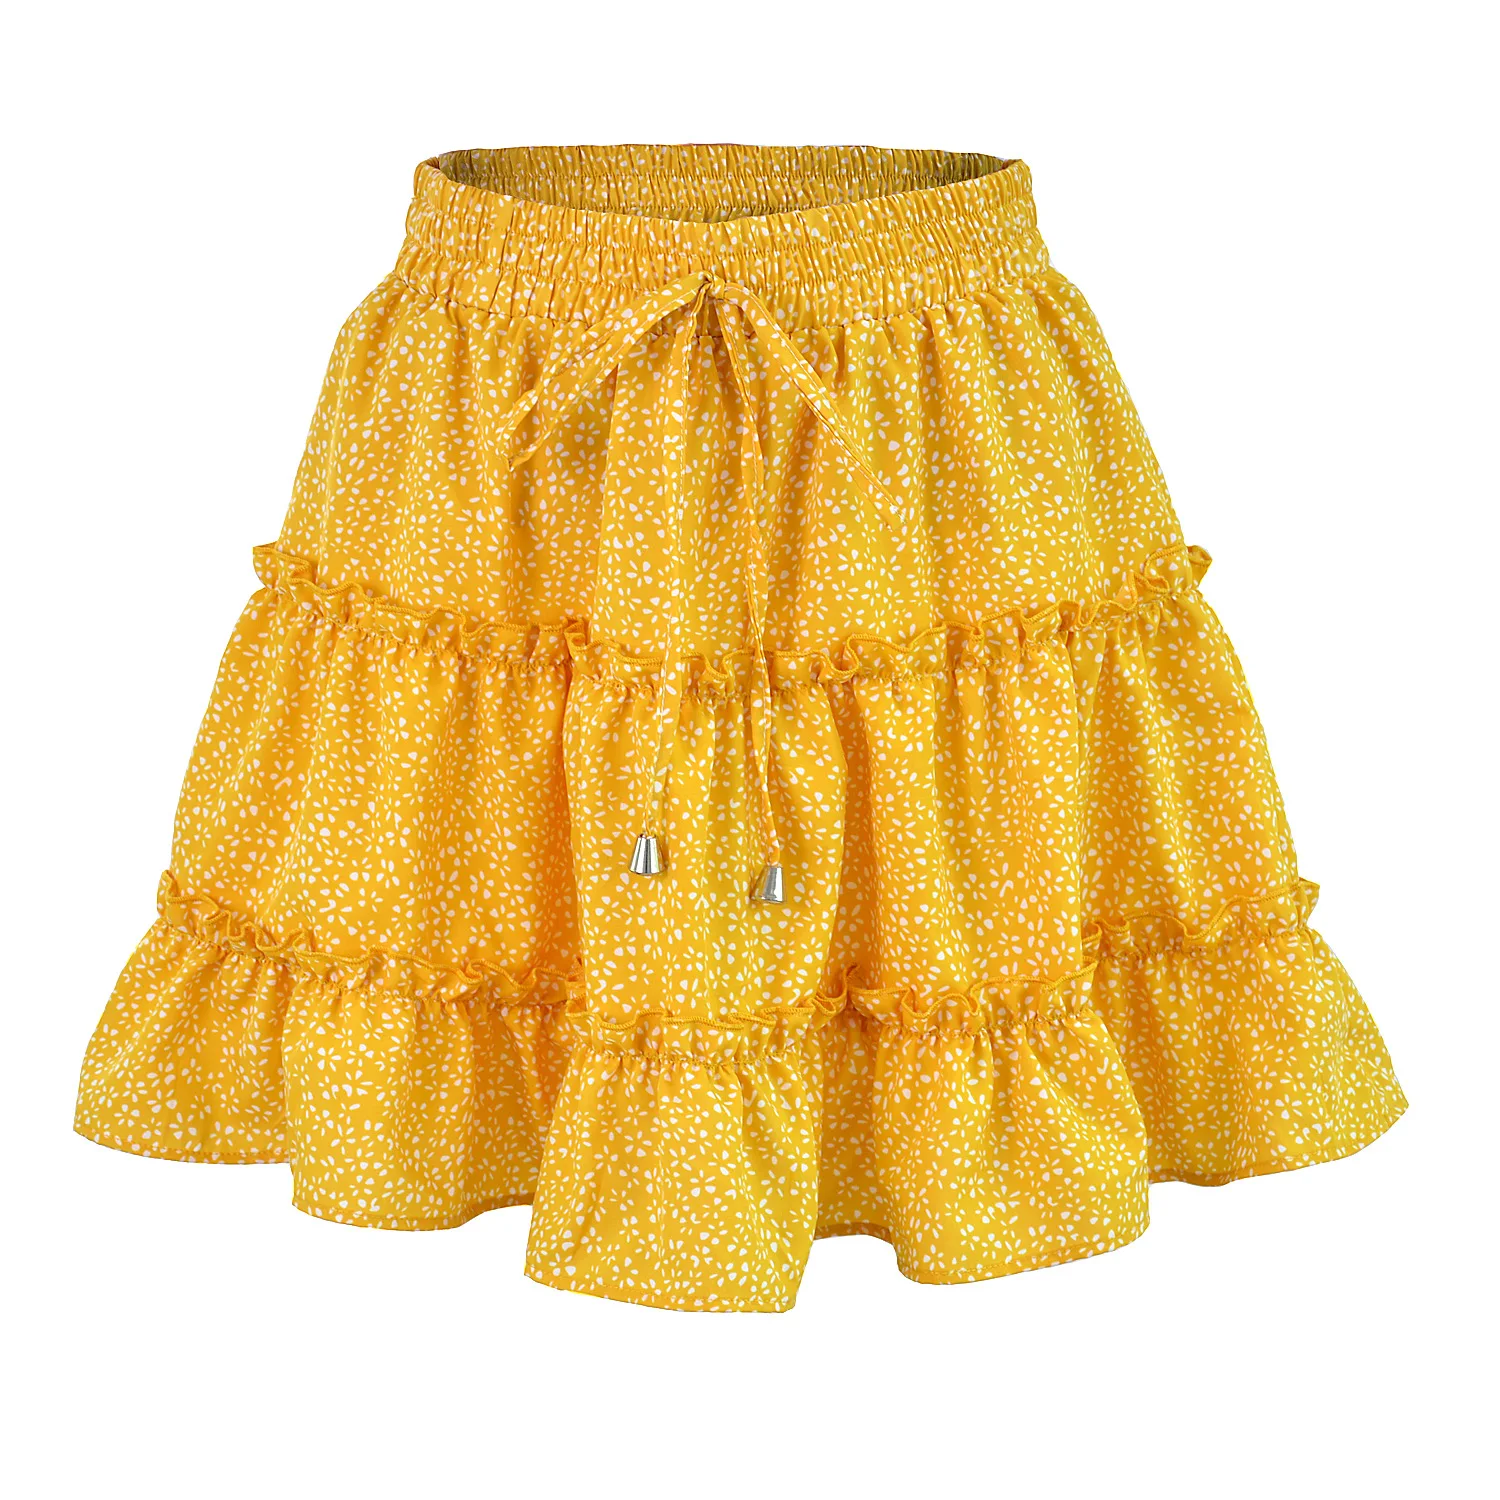 2023 Summer Casual High Waist Women Skirt Elastic Ruffle Floral Printing A-Line Pleated Skirt